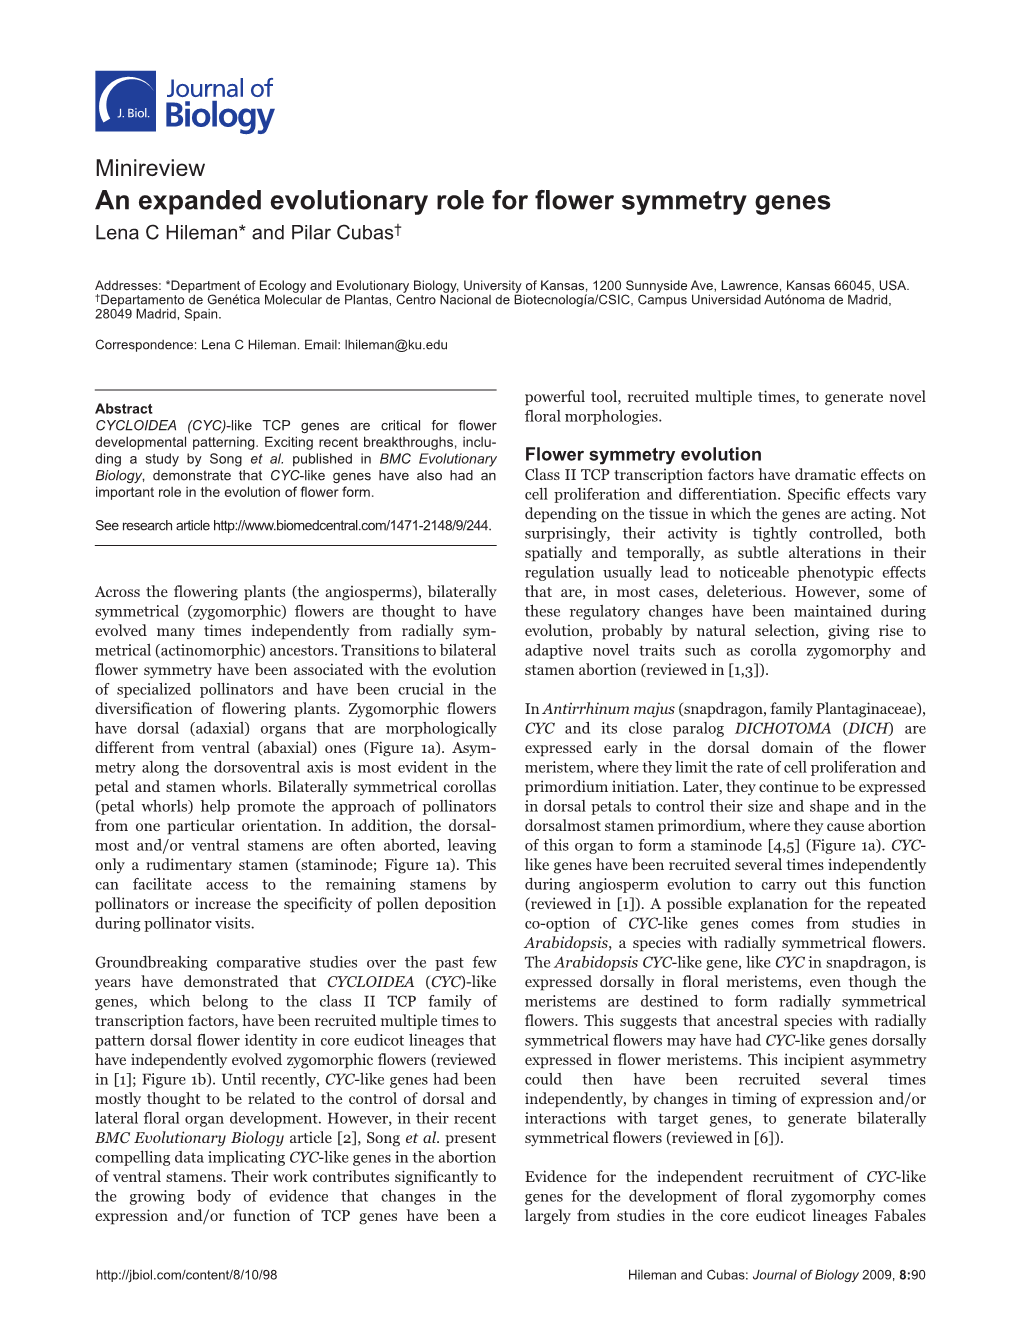 An Expanded Evolutionary Role for Flower Symmetry Genes Lena C Hileman* and Pilar Cubas†